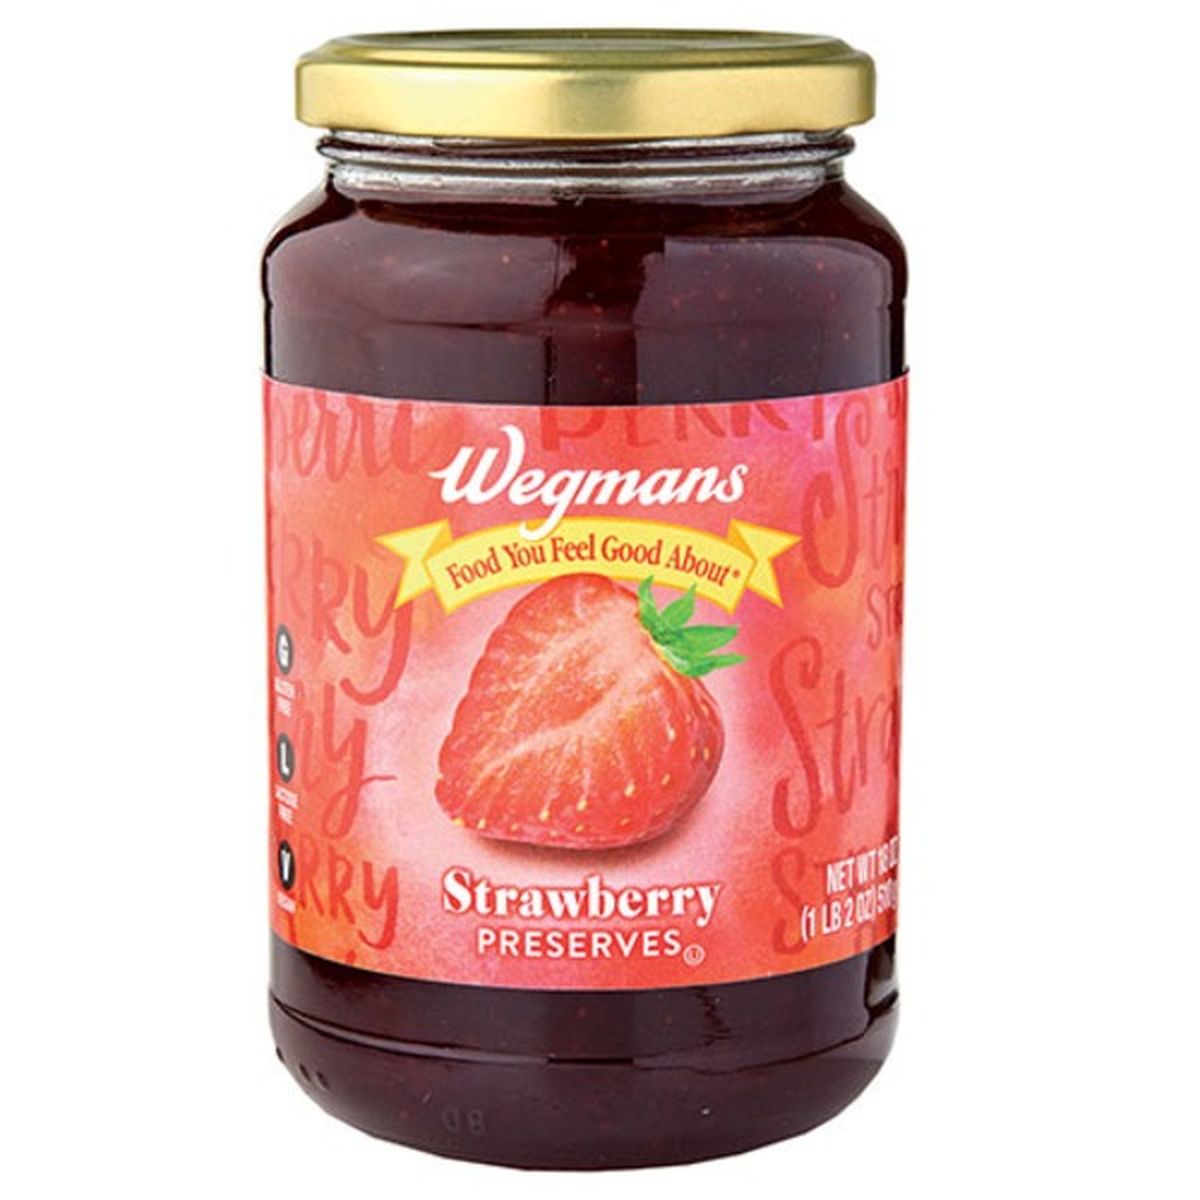 Calories in Wegmans Strawberry Preserves